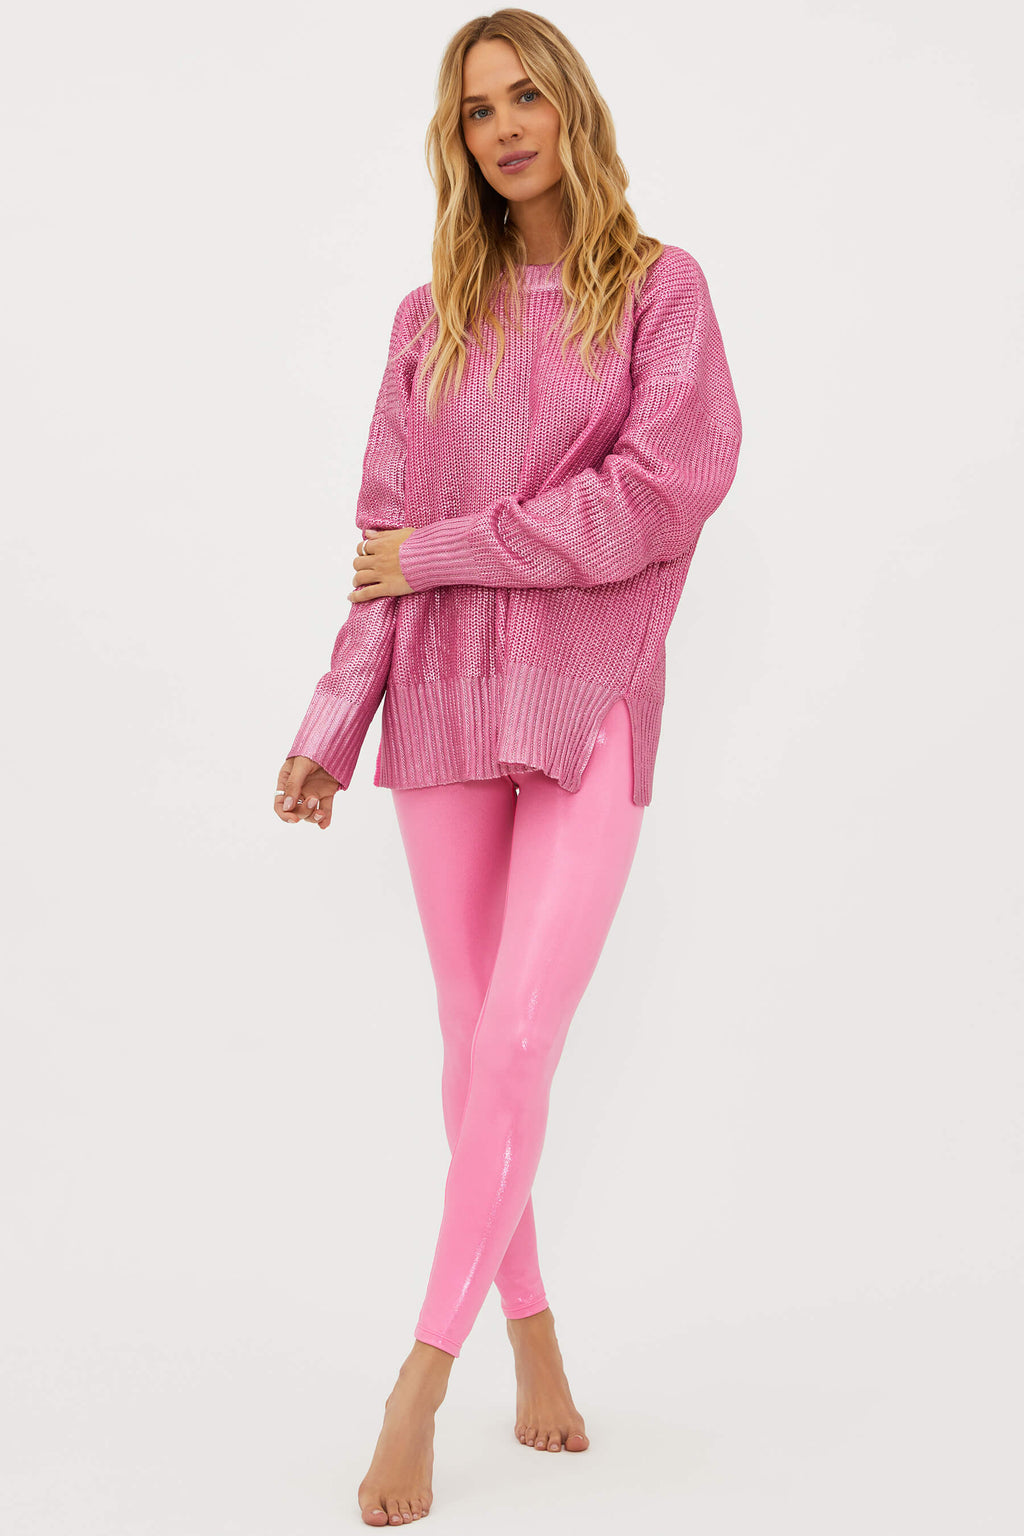 Piper Legging Pink Shimmer